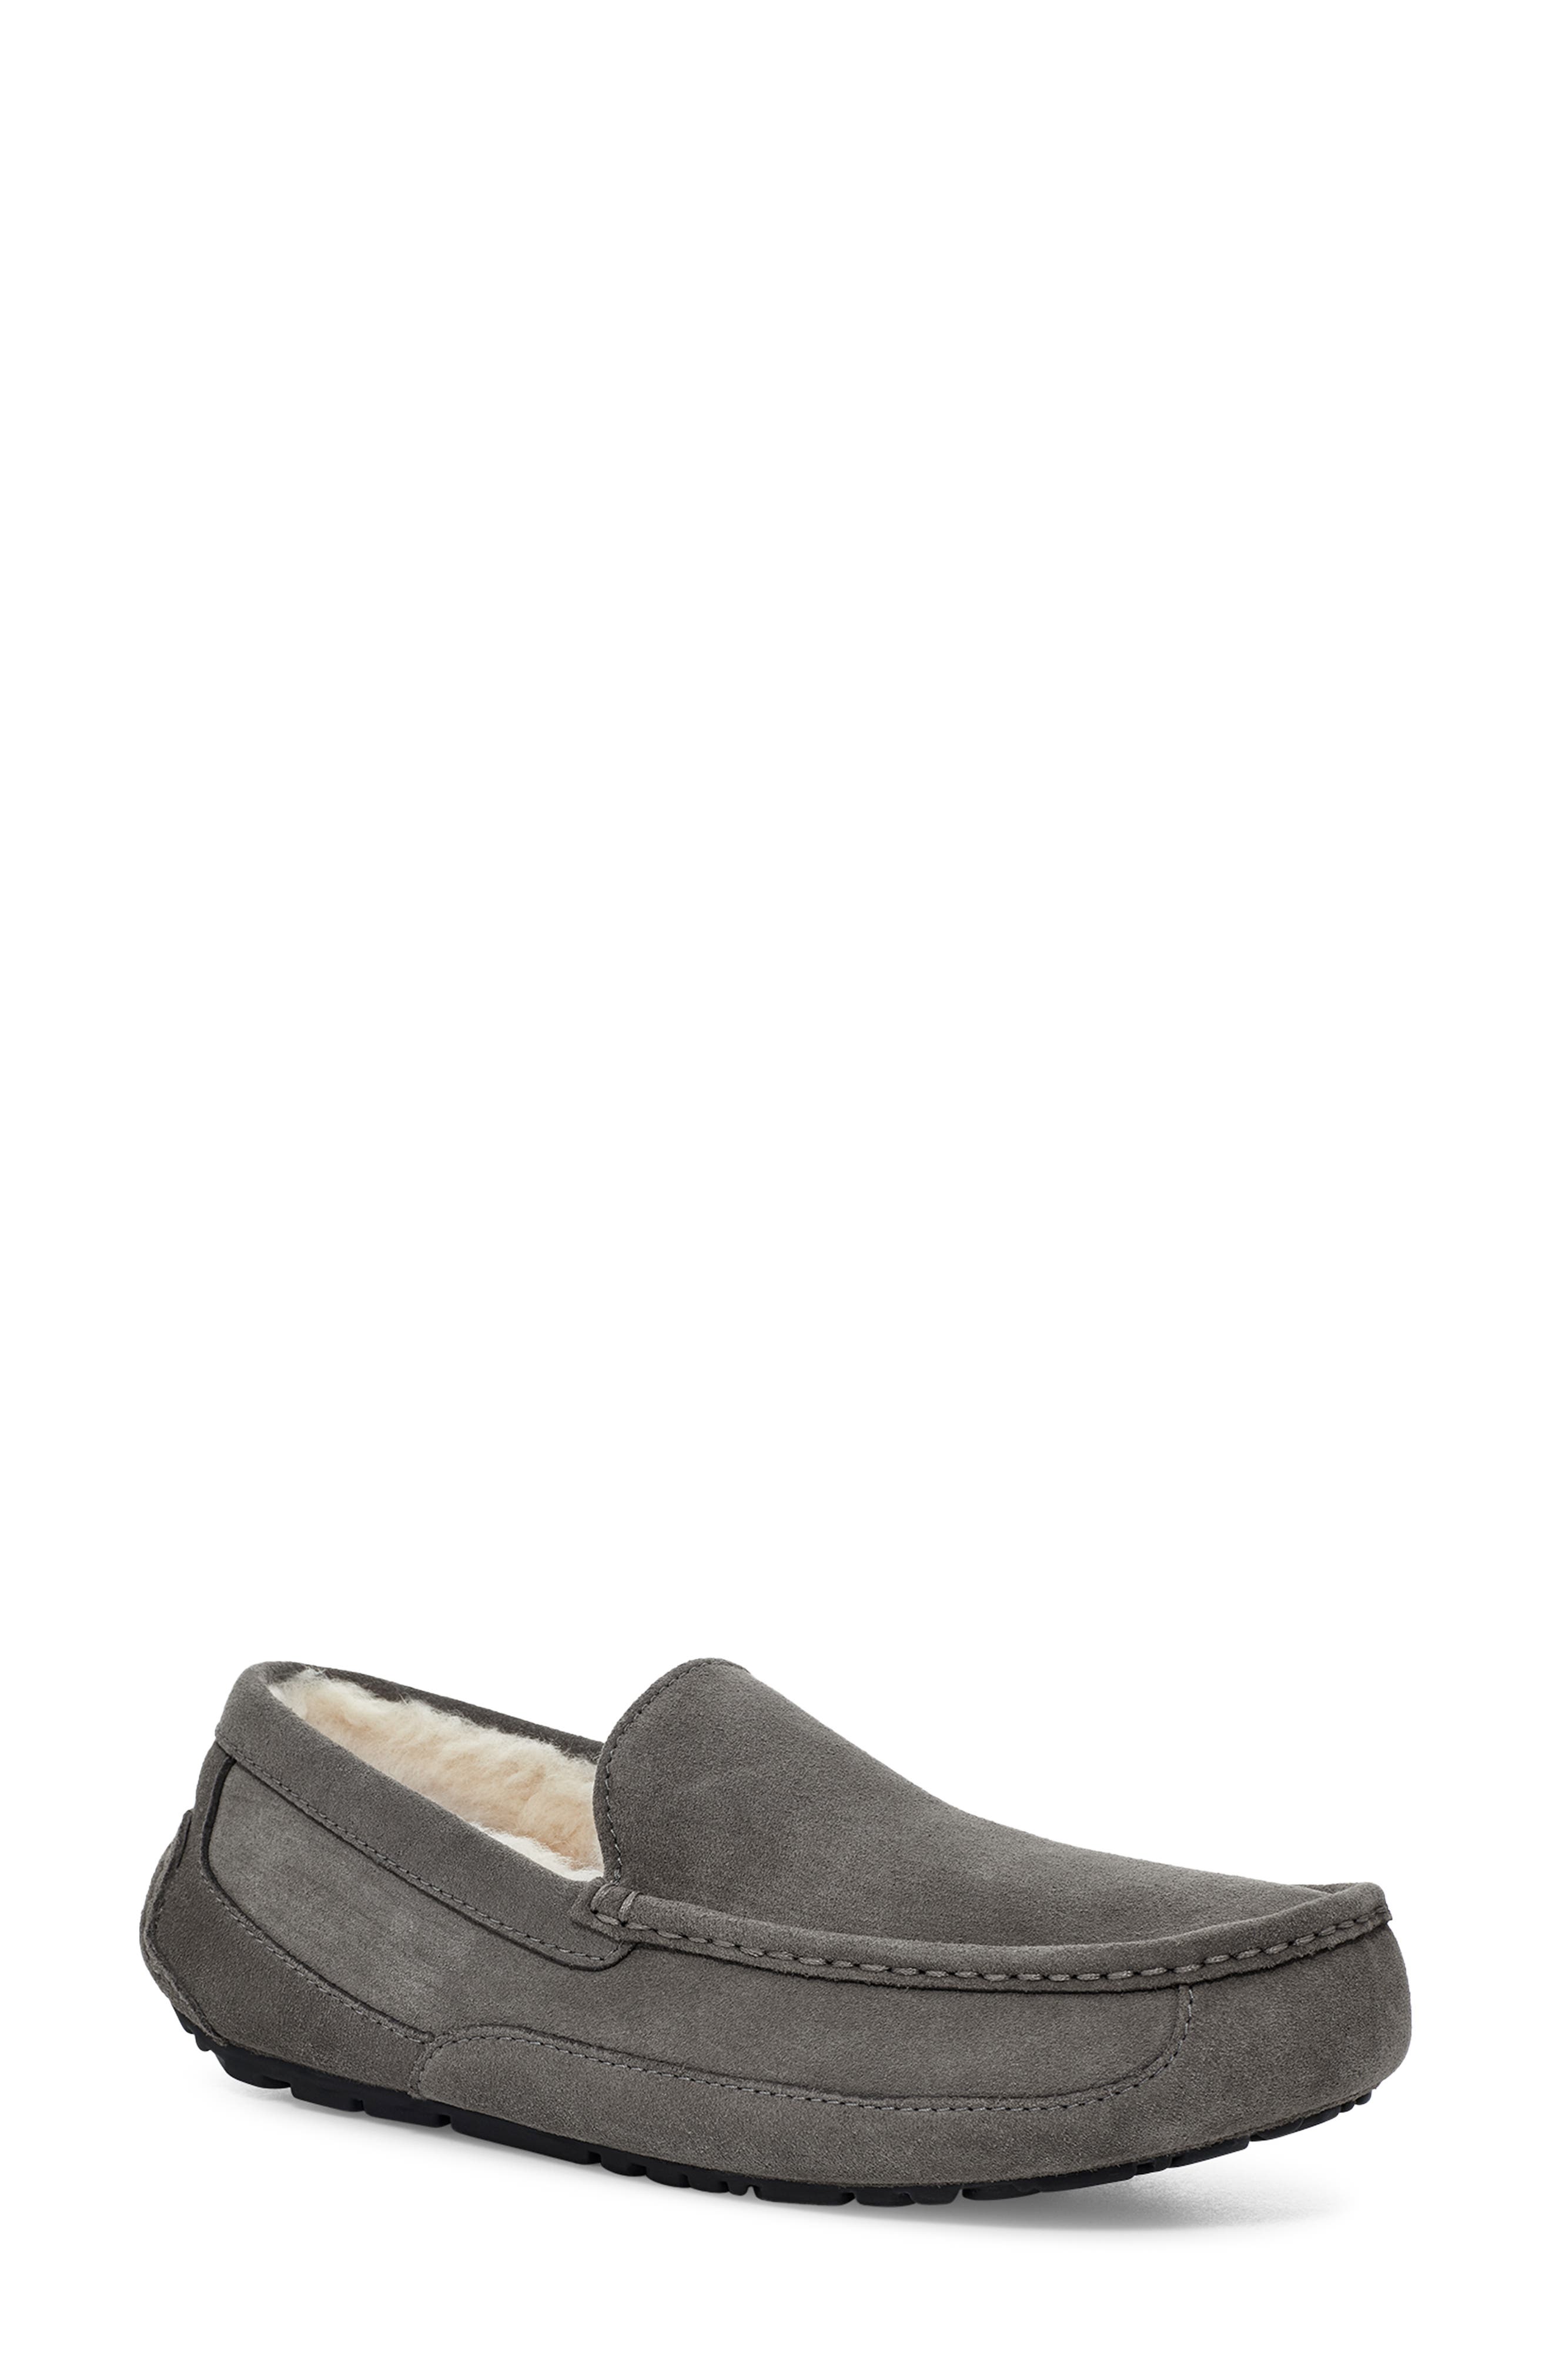 gray ugg slippers